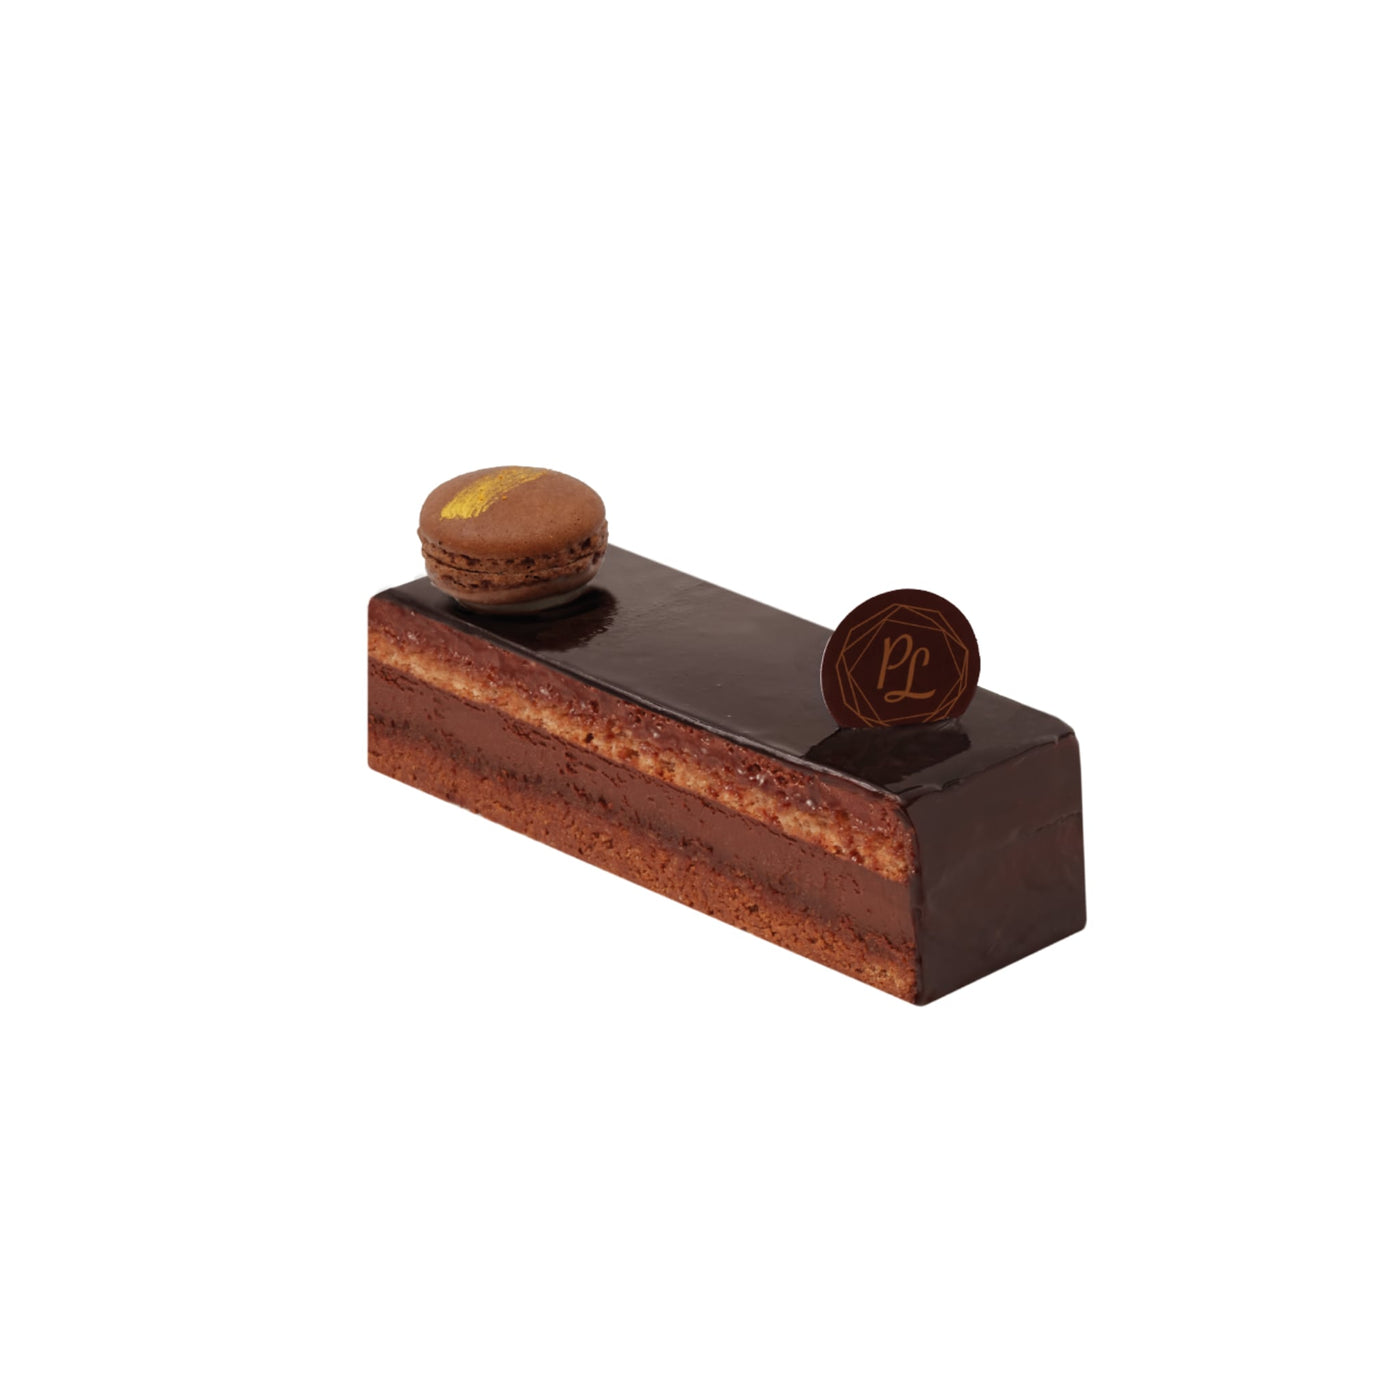 Chocolate Craquelin - Artisanal Pastries